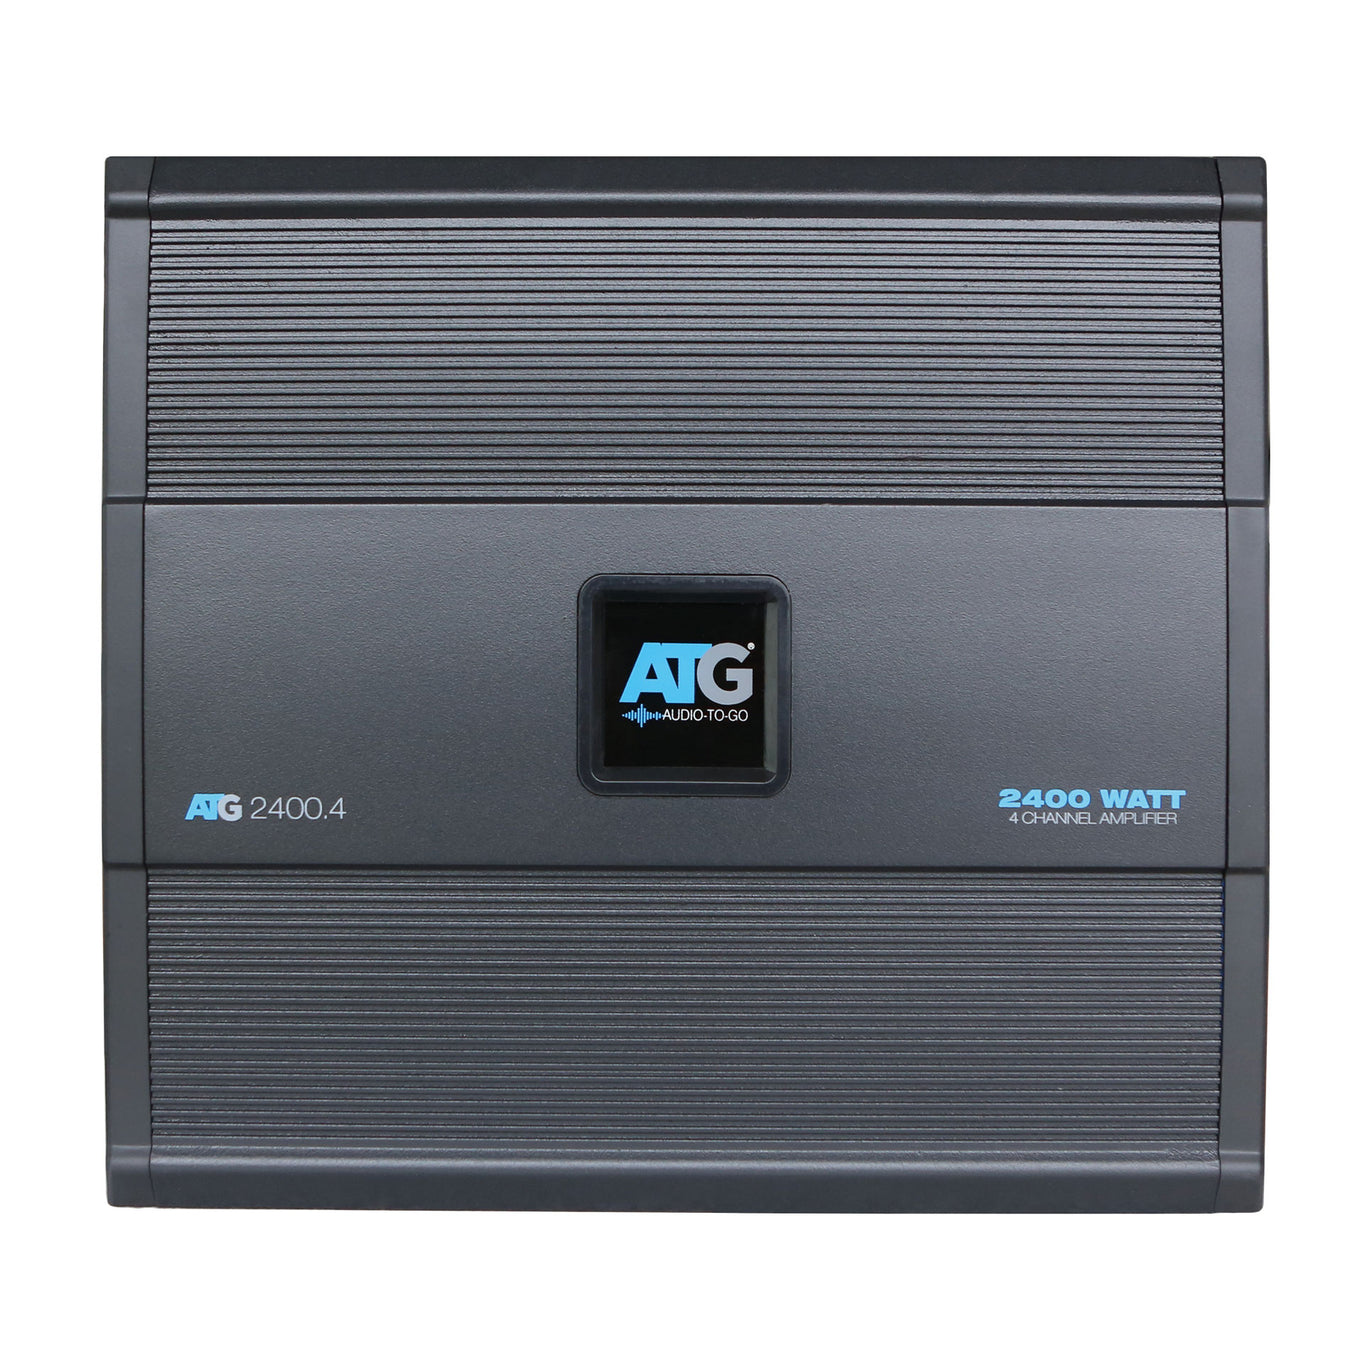 Audio-To-Go (ATG) Car Audio Amplifiers